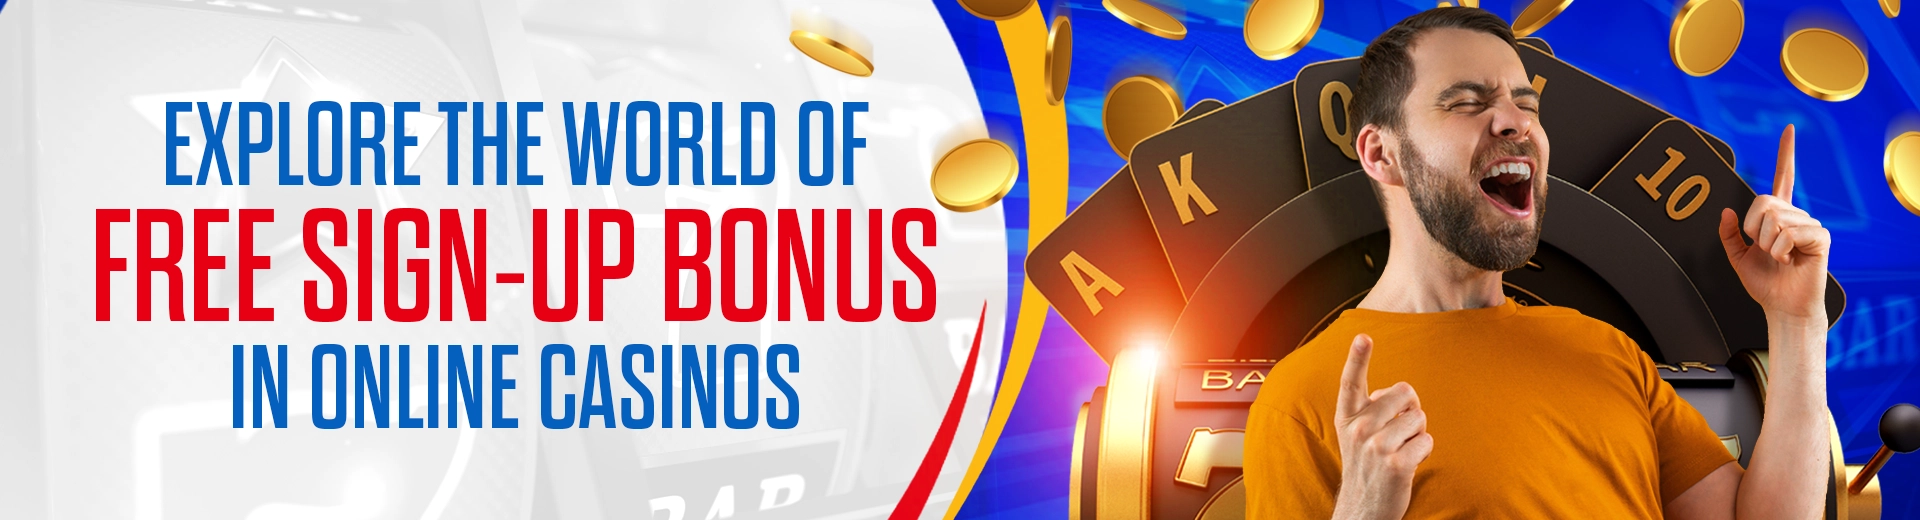 OKBet Online Casino Free Sign Up Bonus